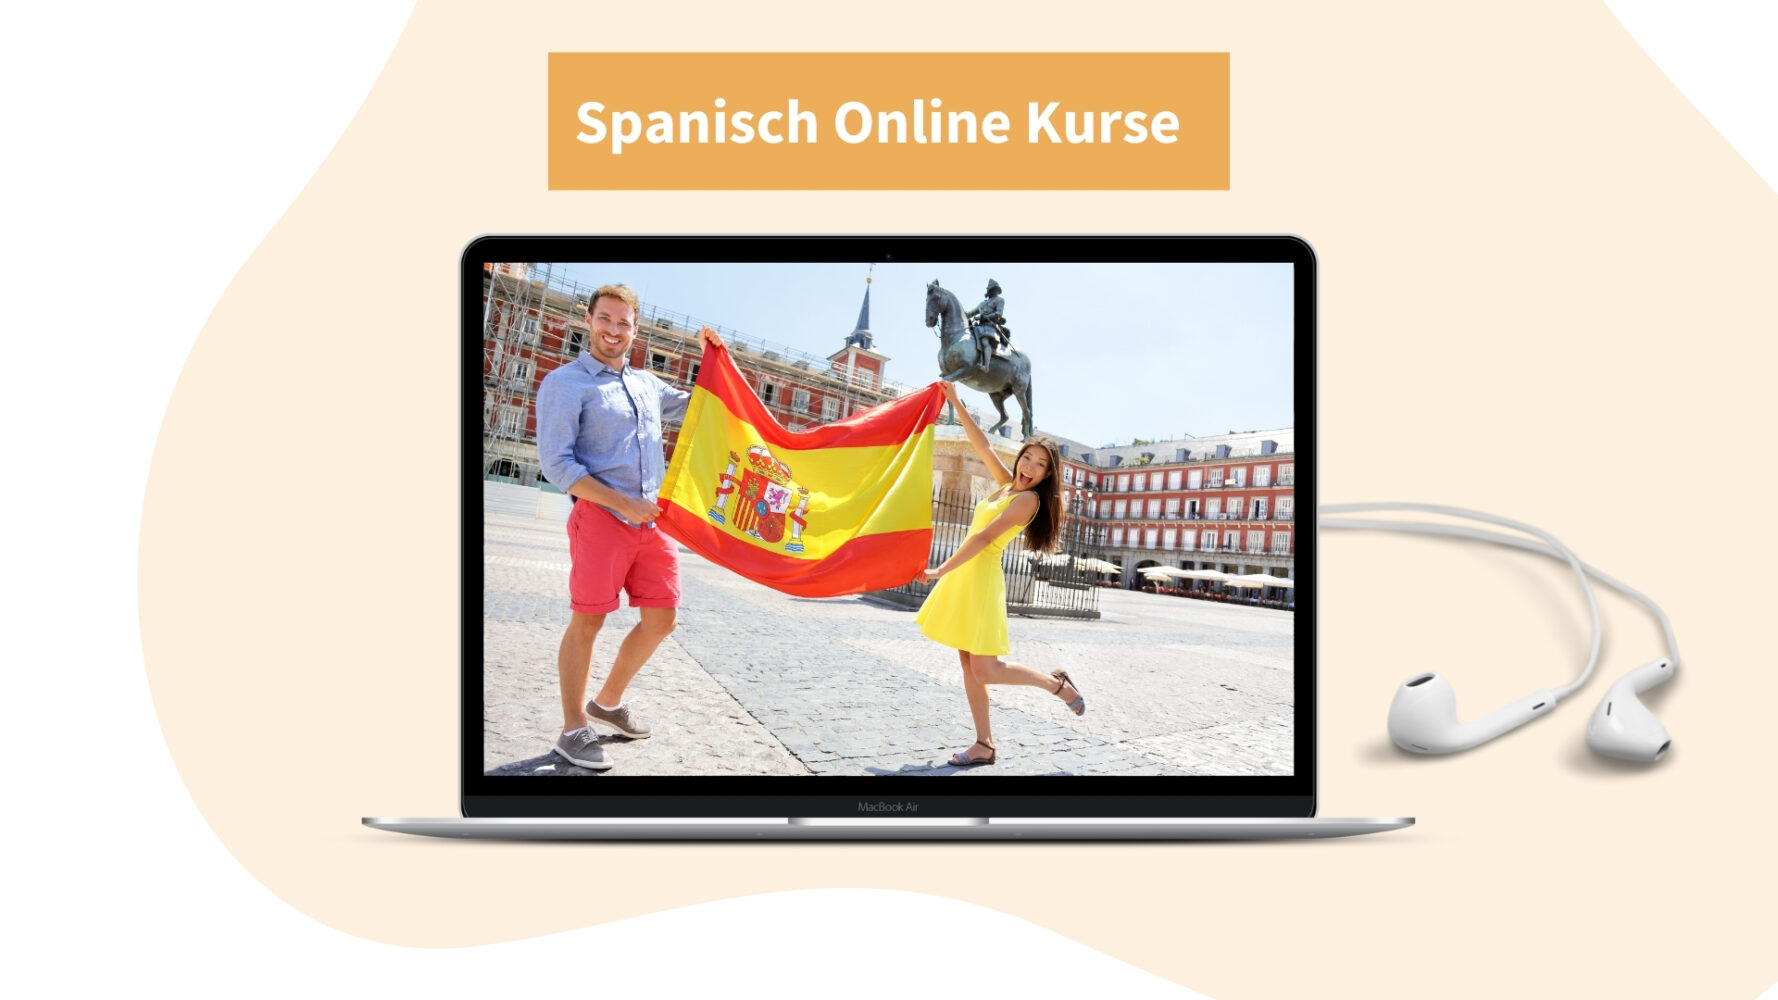 Spanisch Online Kurse